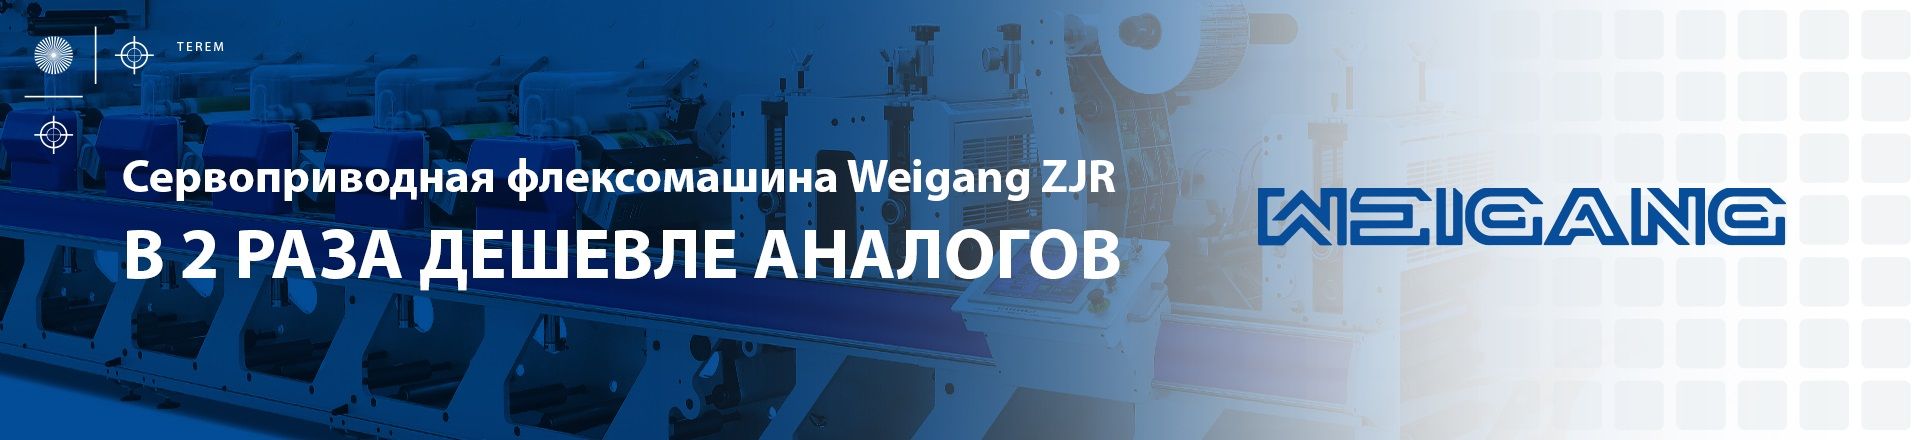 Weigang ZJR: в 2 раза дешевле аналогов (zone 2)